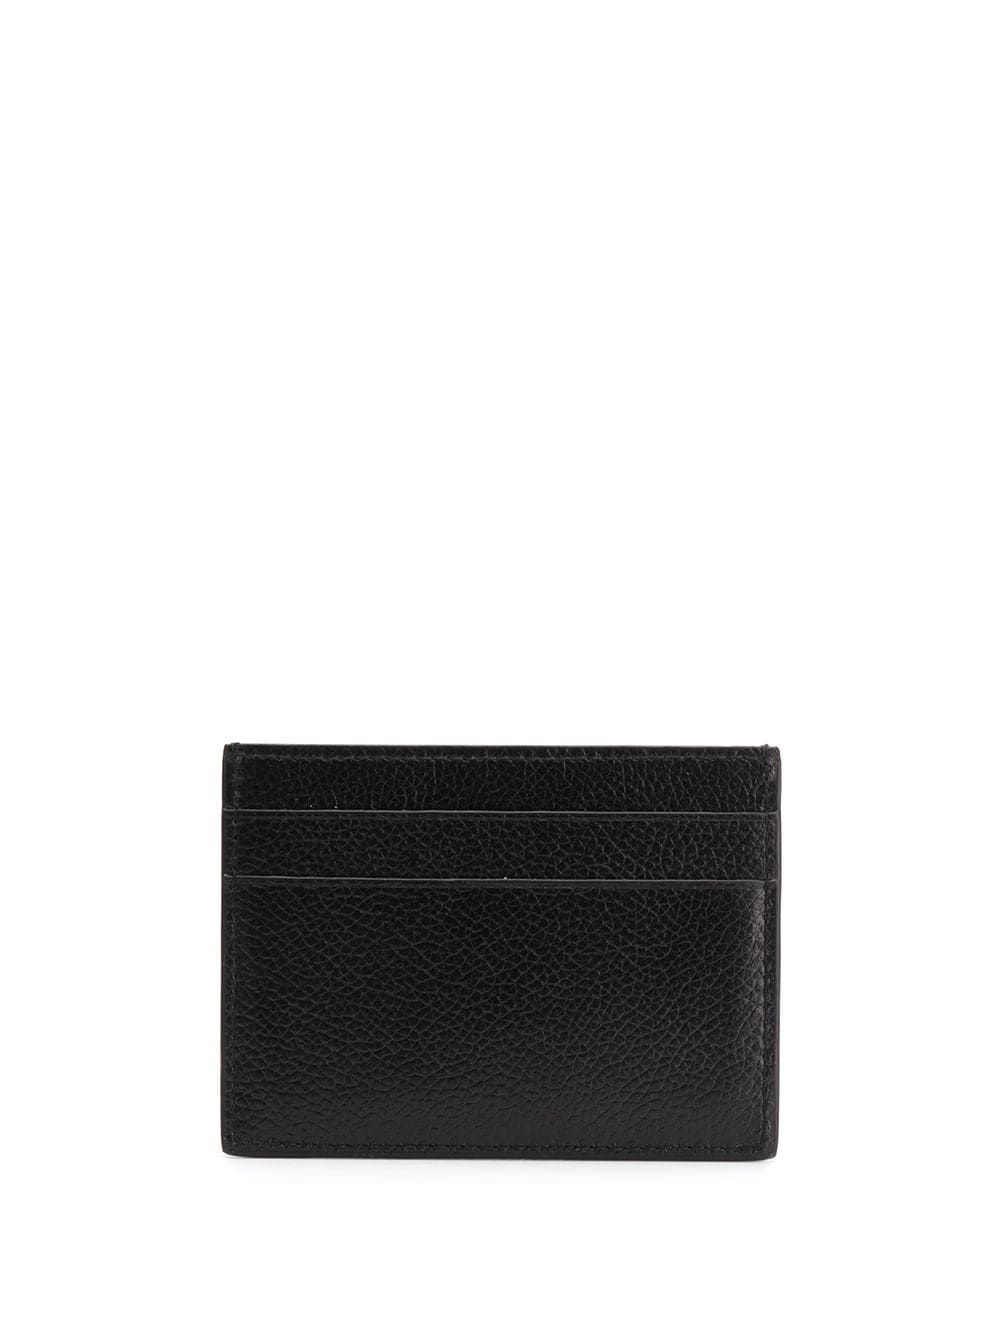 Cash leather credit card case - 3